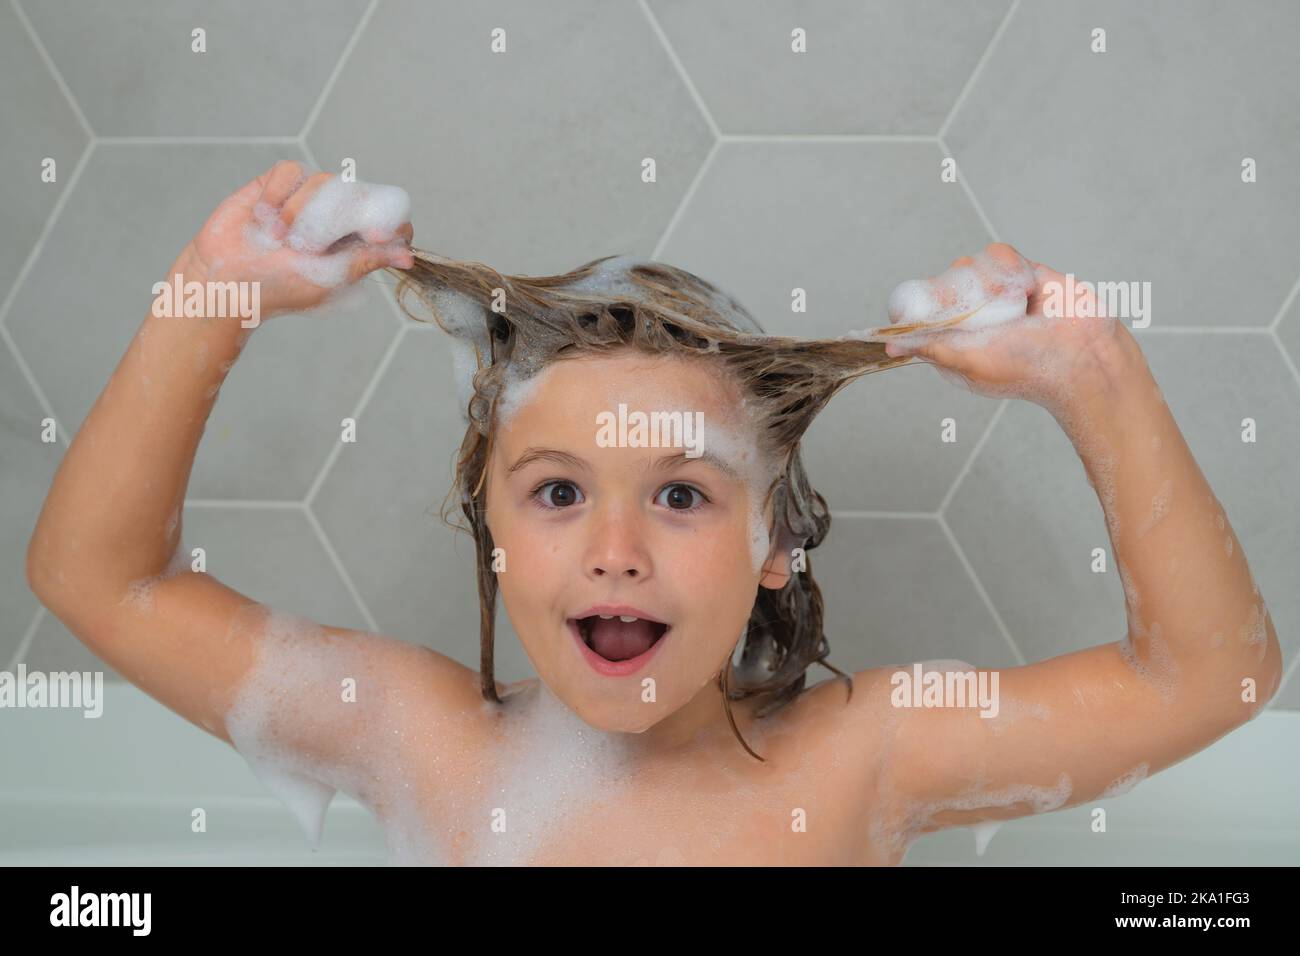 Kid Washing Hair Boy Child In A Bath With Foam Kids Bathing And Hygiene Procedures Bath Tub With Soap Bubble Funny Kids Face 2KA1FG3 